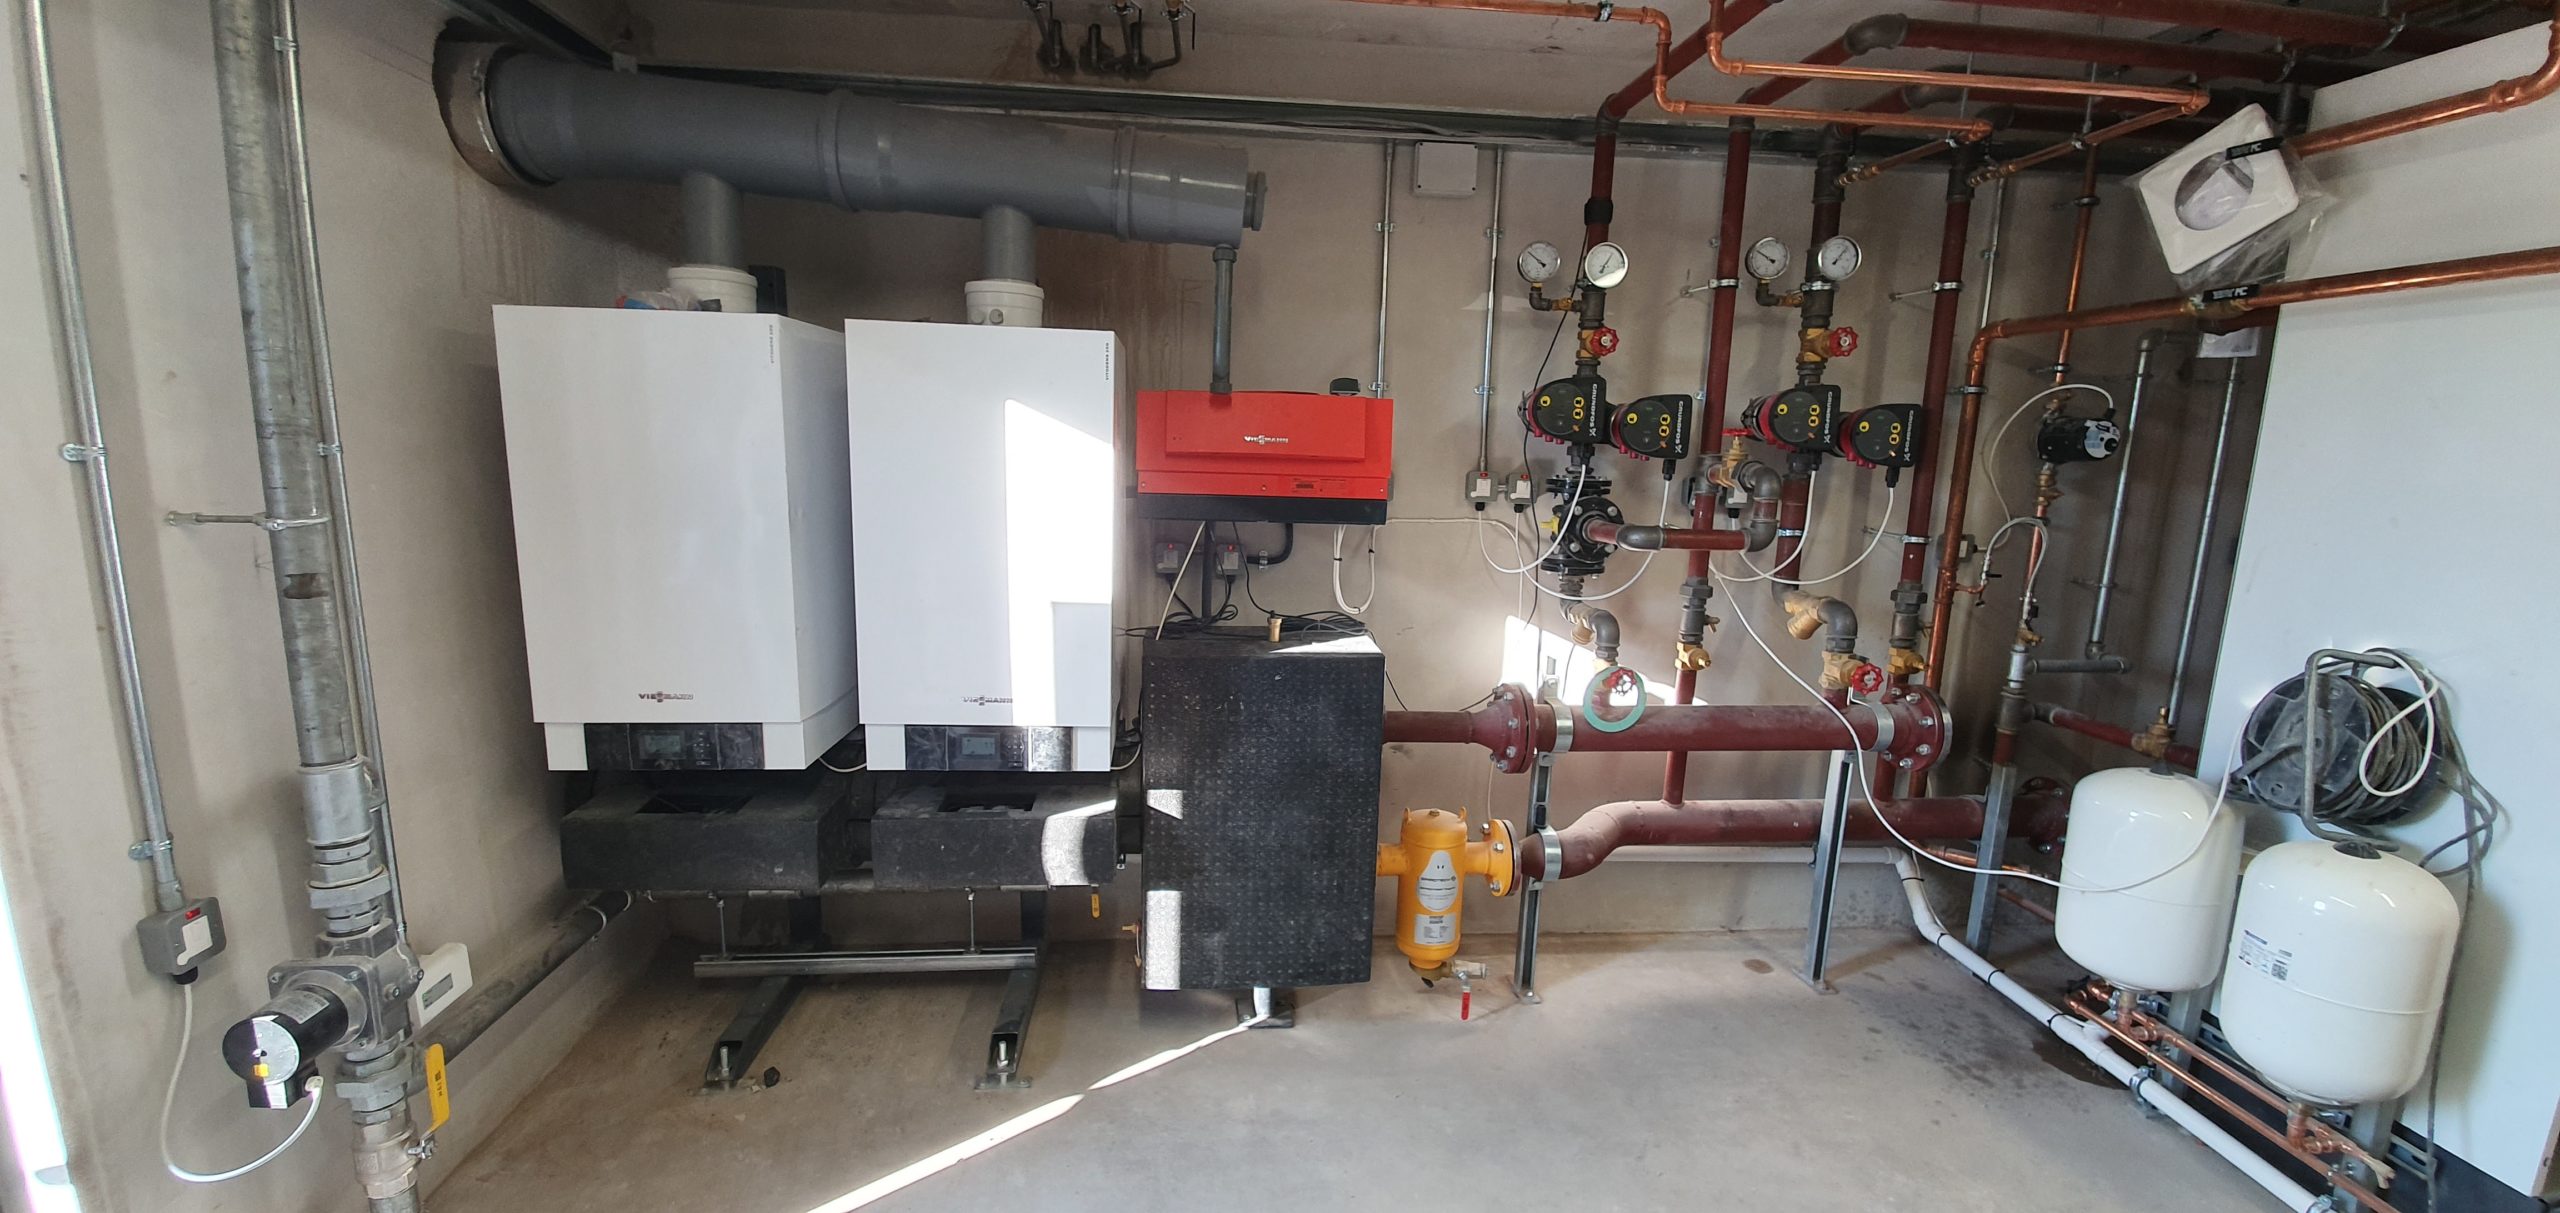 Grouse Care Home – Gas Boiler & Underfloor Heating